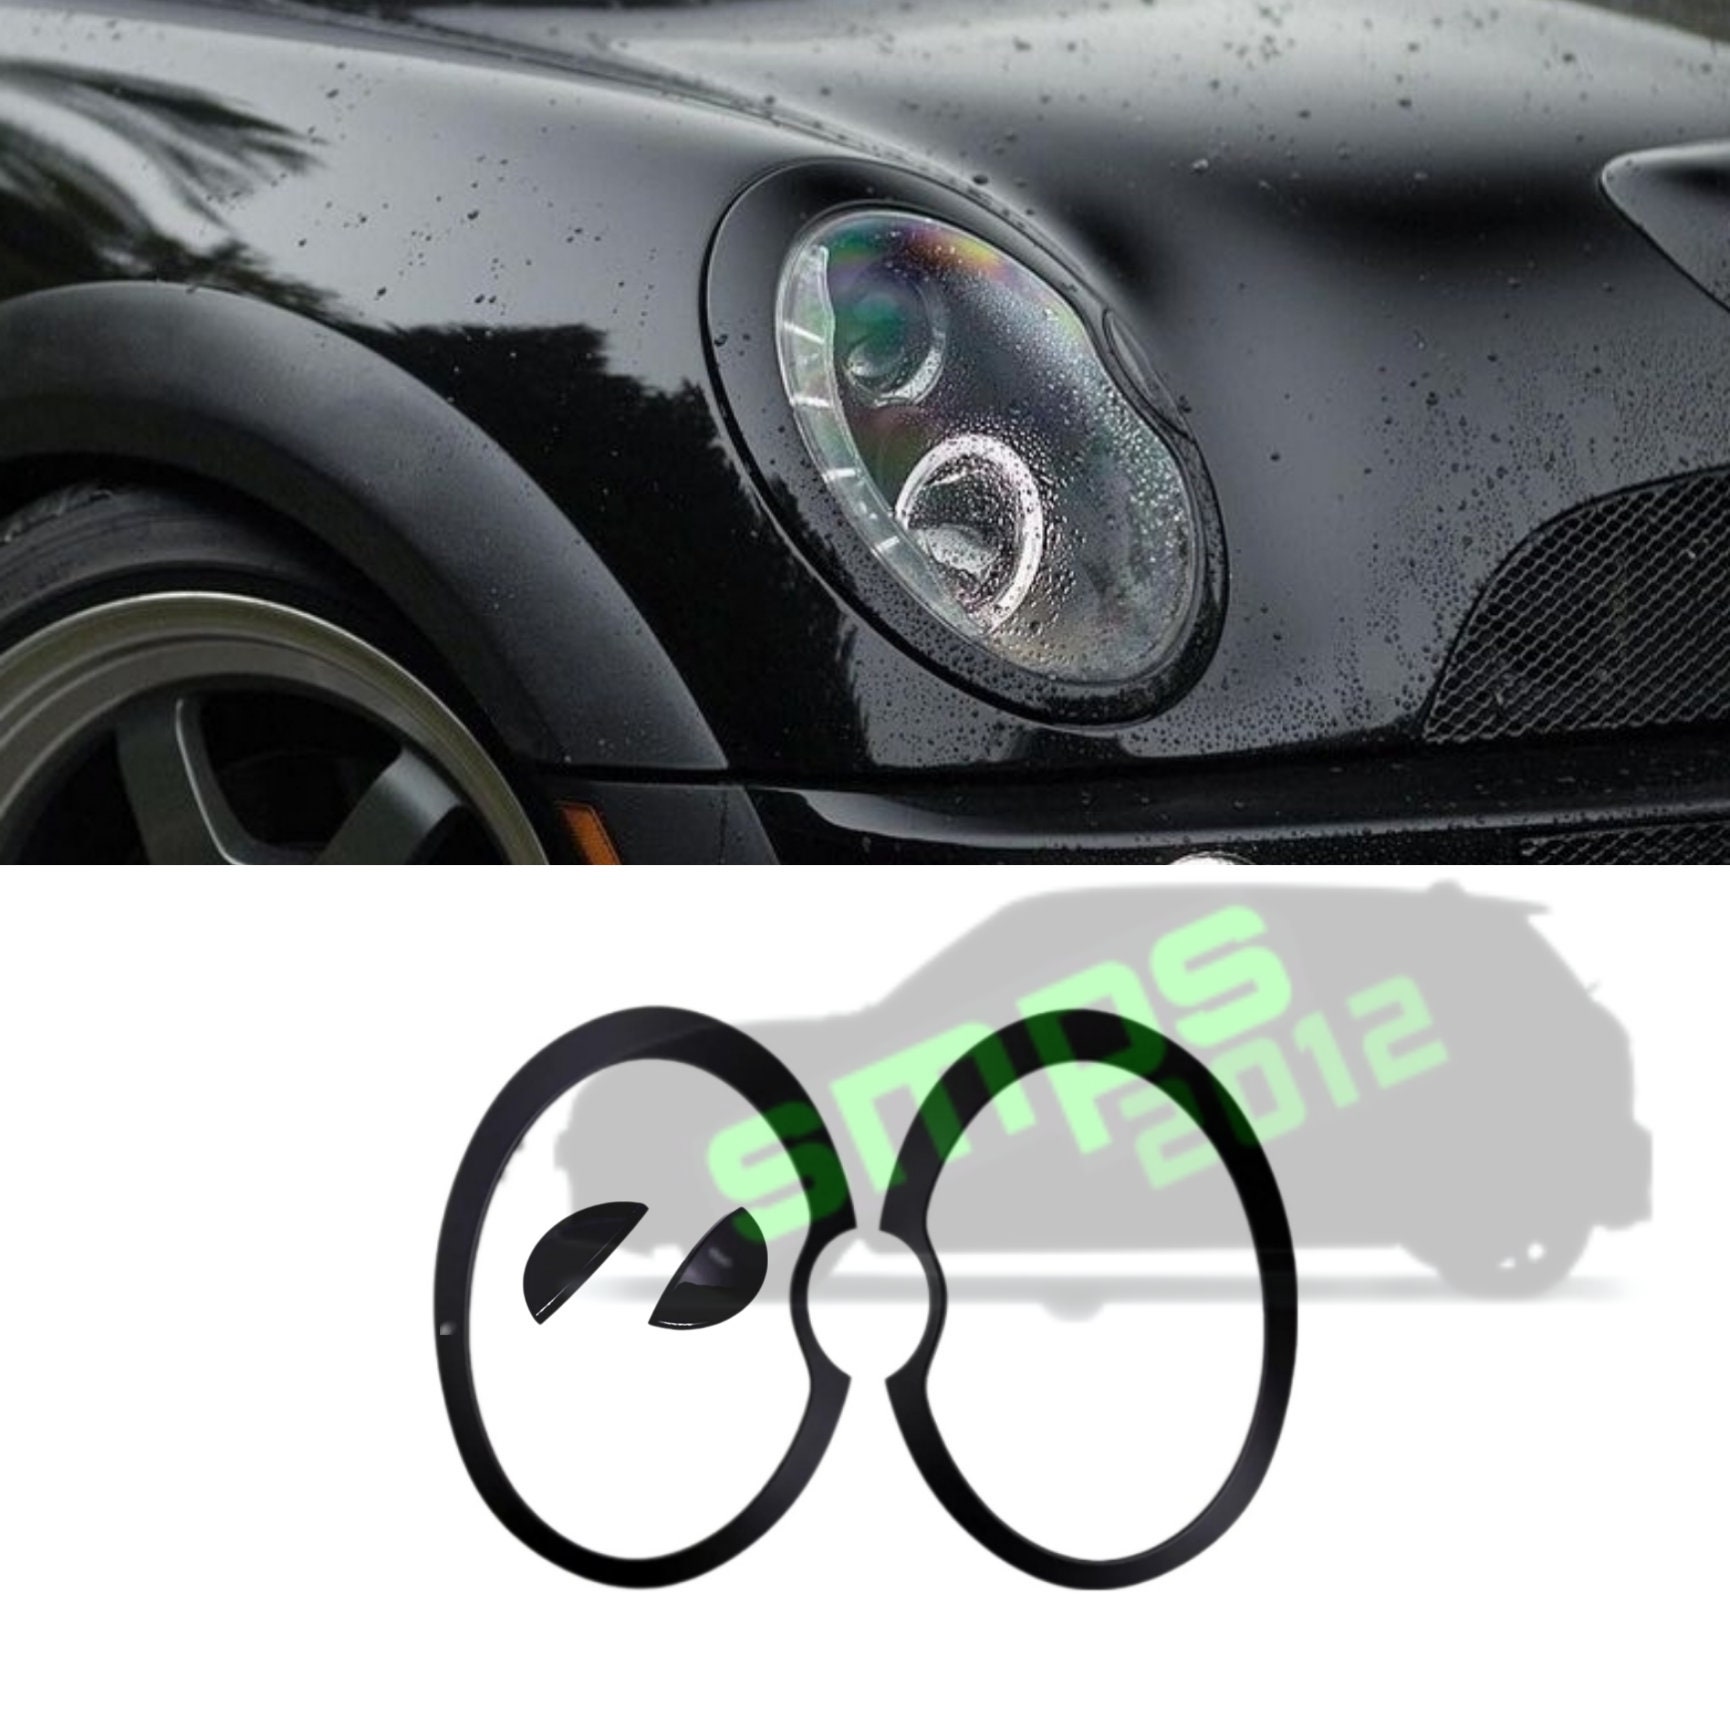 Style: Dechroming Headlight Rings on the Mini Cooper S F56 